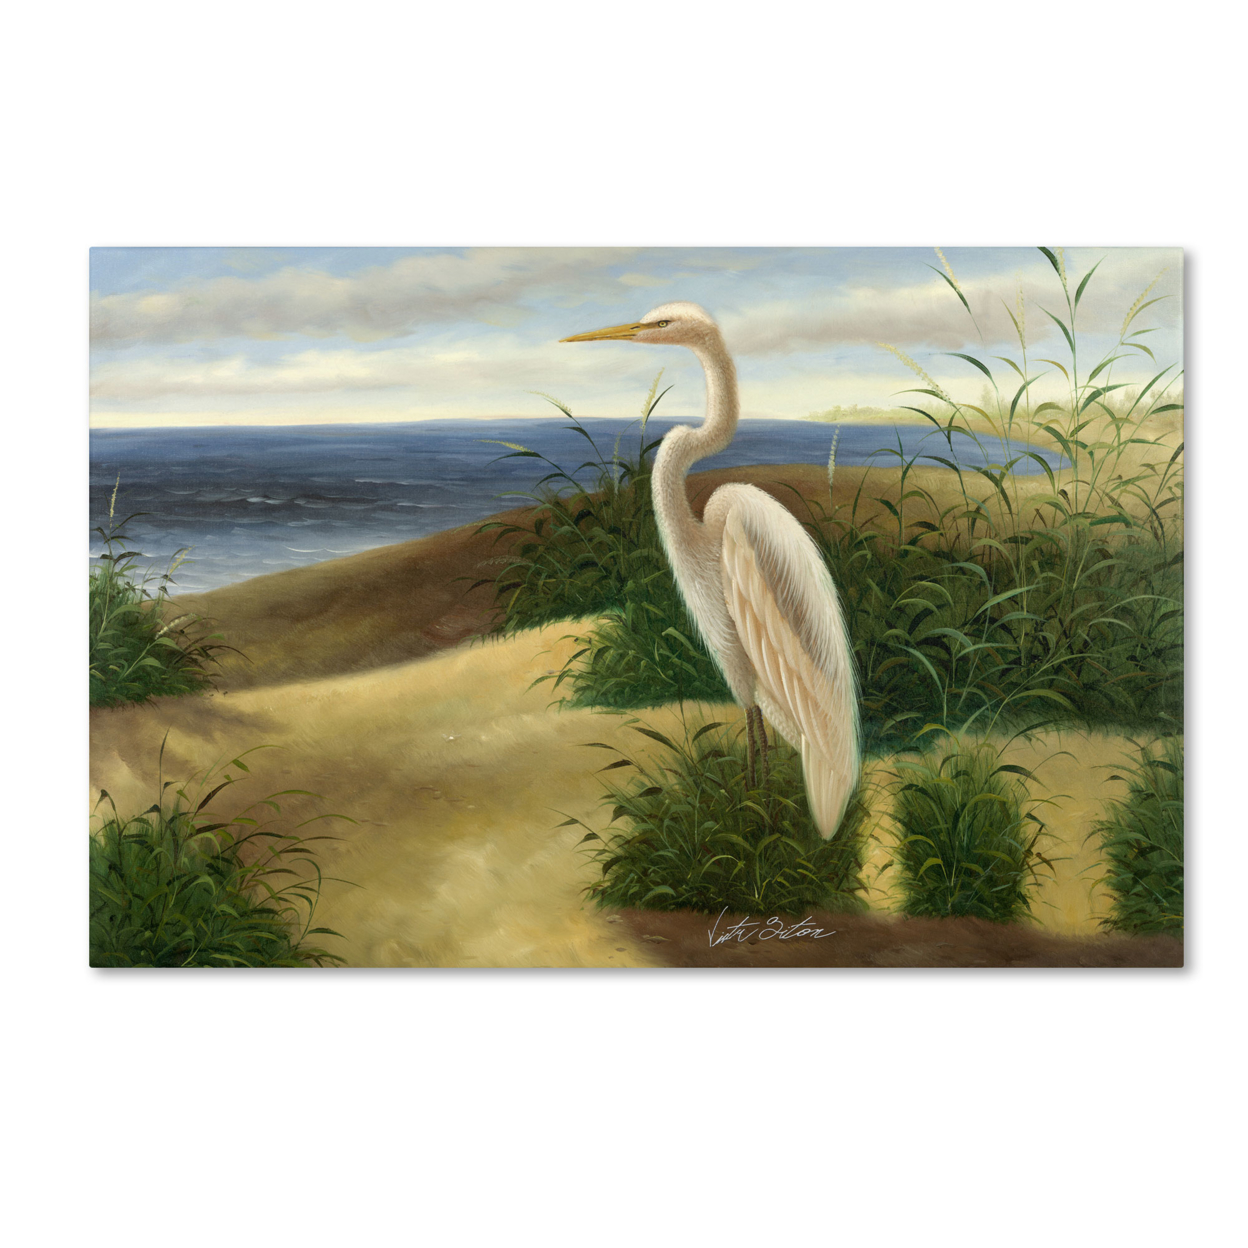 Victor Giton 'One Heron At The Beach' Canvas Art 16 X 24